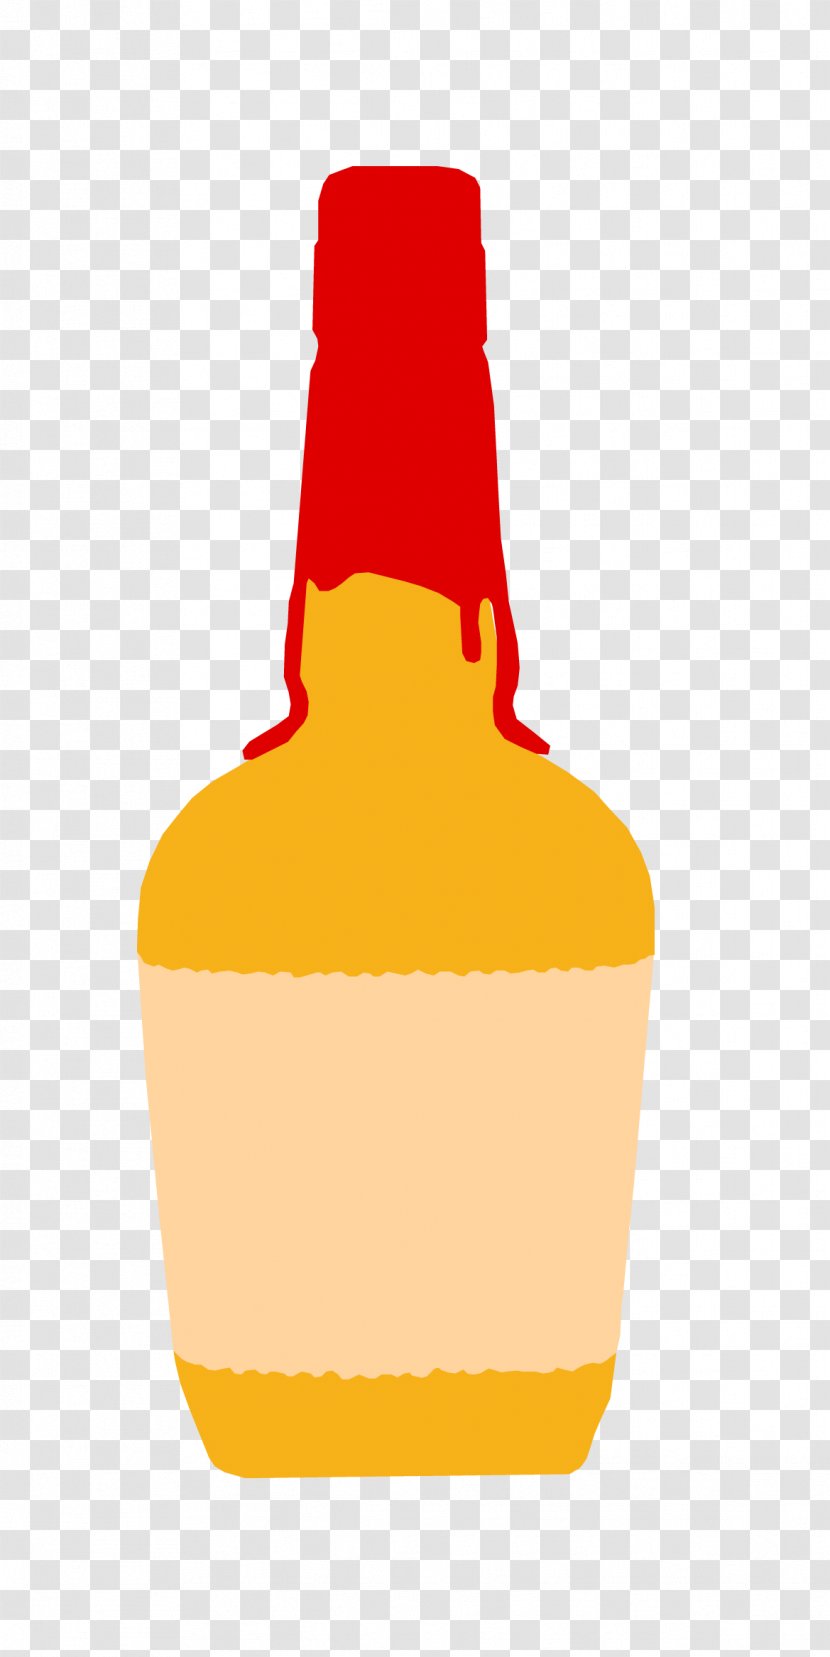 Maker's Mark Bourbon Whiskey Bottle Jim Beam - Alcohol By Volume Transparent PNG